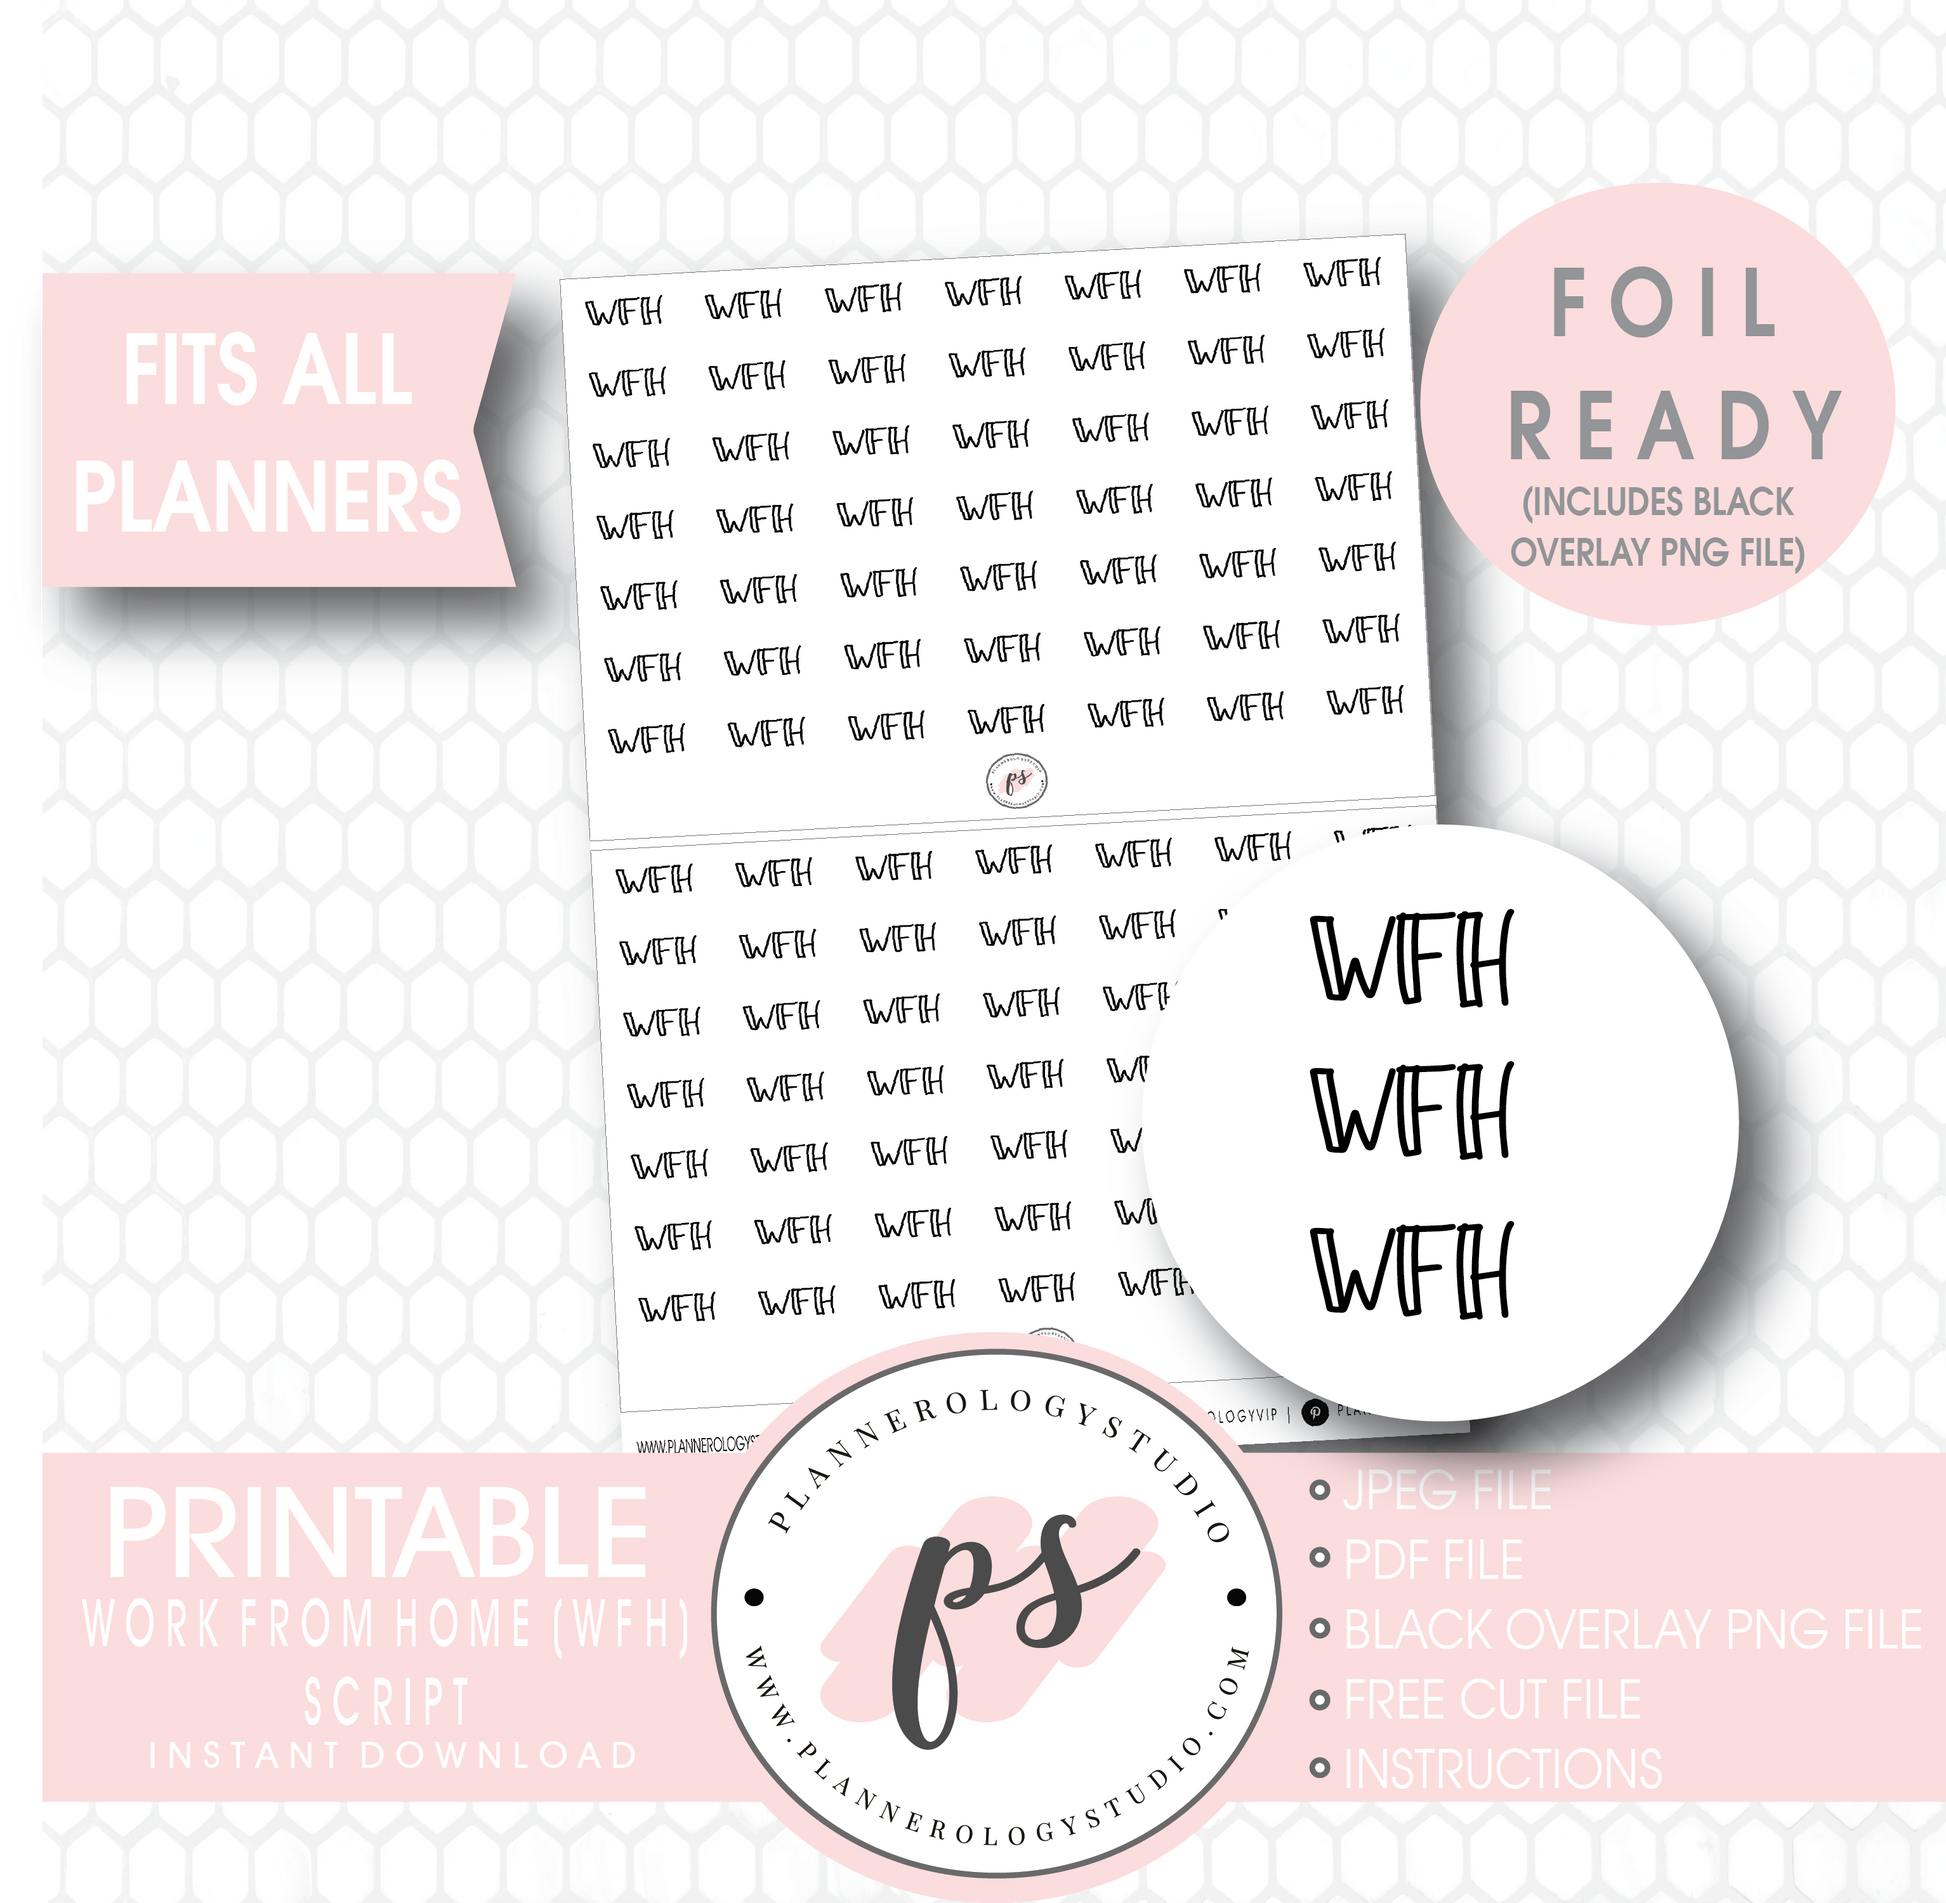 WFH (Work from Home) Bujo Script Digital Printable Planner Stickers (Foil Ready) - Plannerologystudio